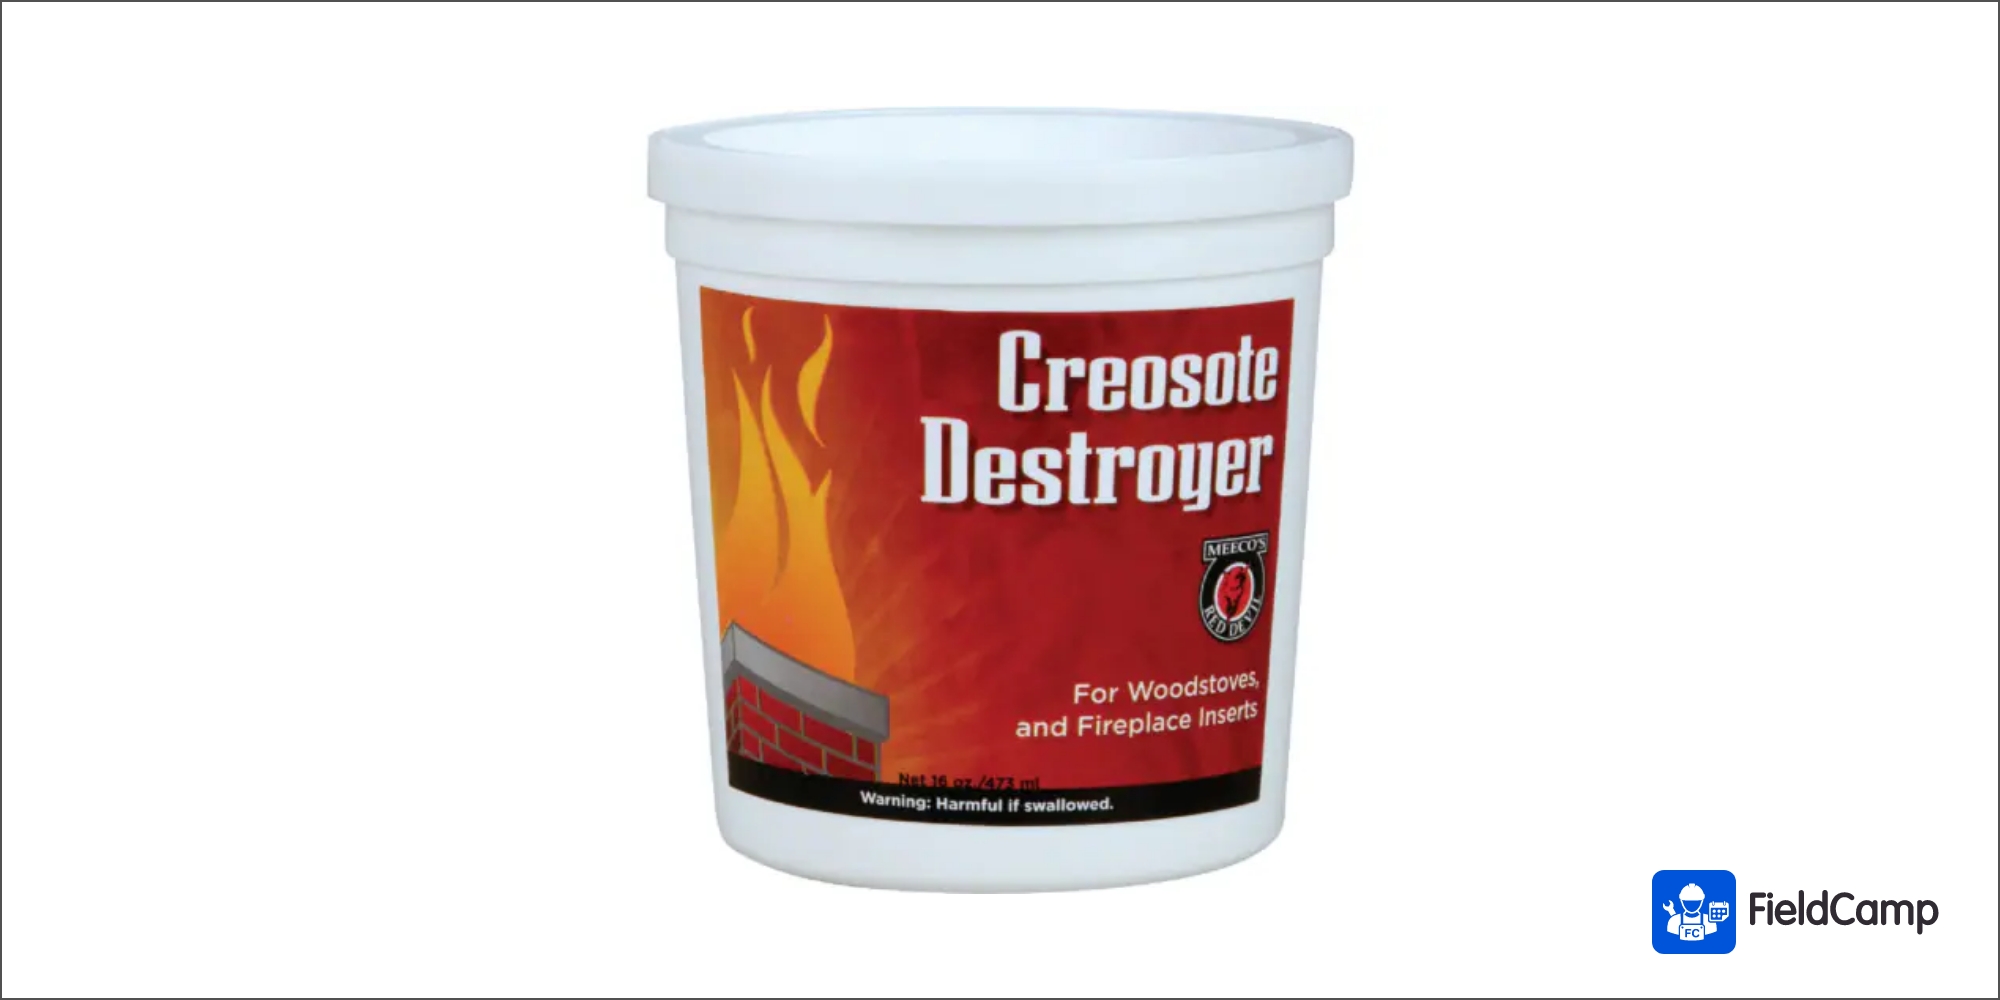 Powder-based creosote remover